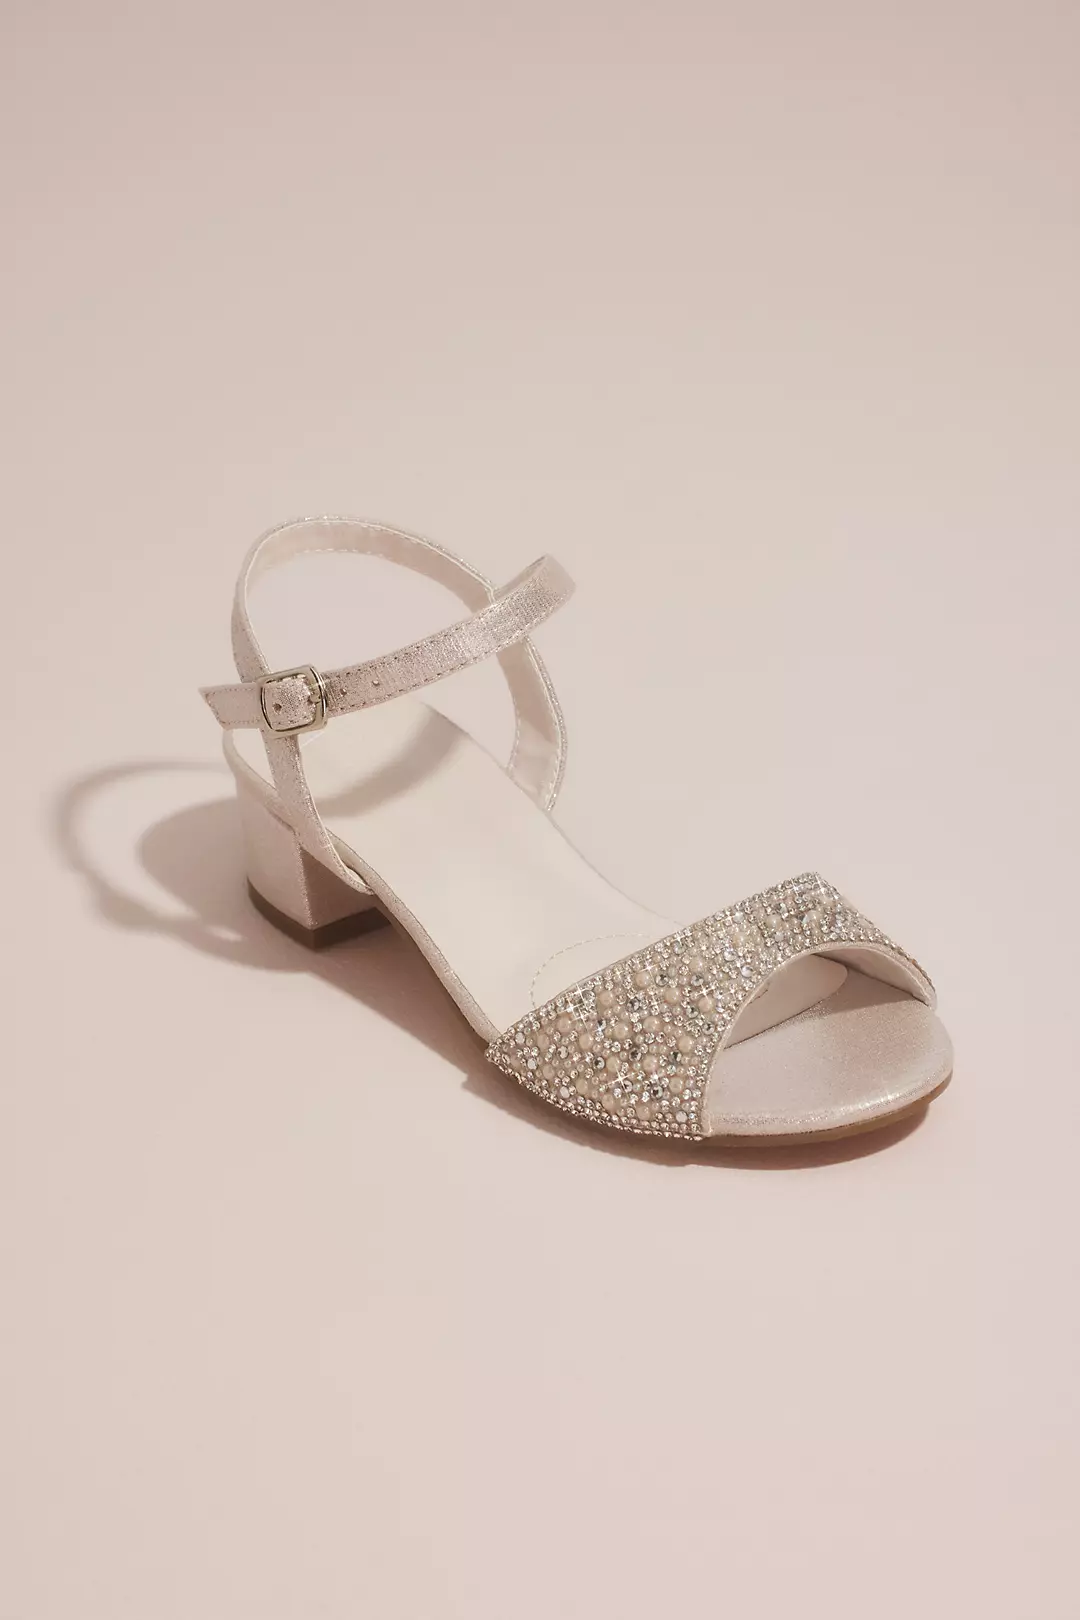 Women's Summer Fashion Sandals Pearls Rhinestones Open Toe Slides Sandals  Yoga Mat Comfort Platform Slippers Shoes